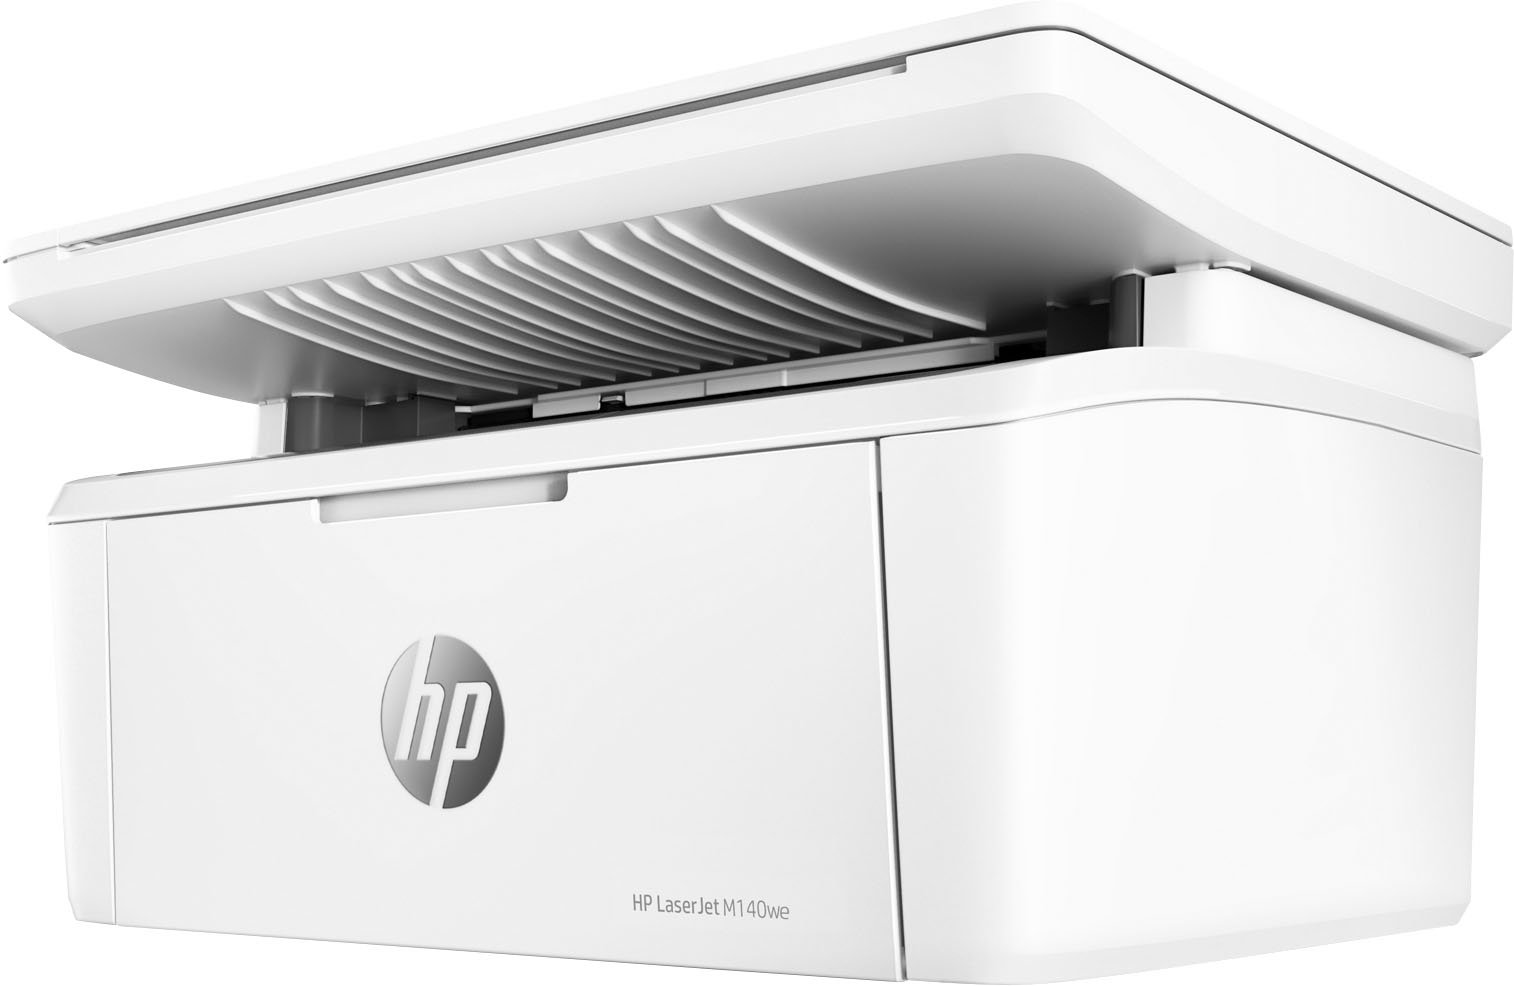 HP LaserJet Pro MFP M234sdwe - Imprimante multifonction - Garantie